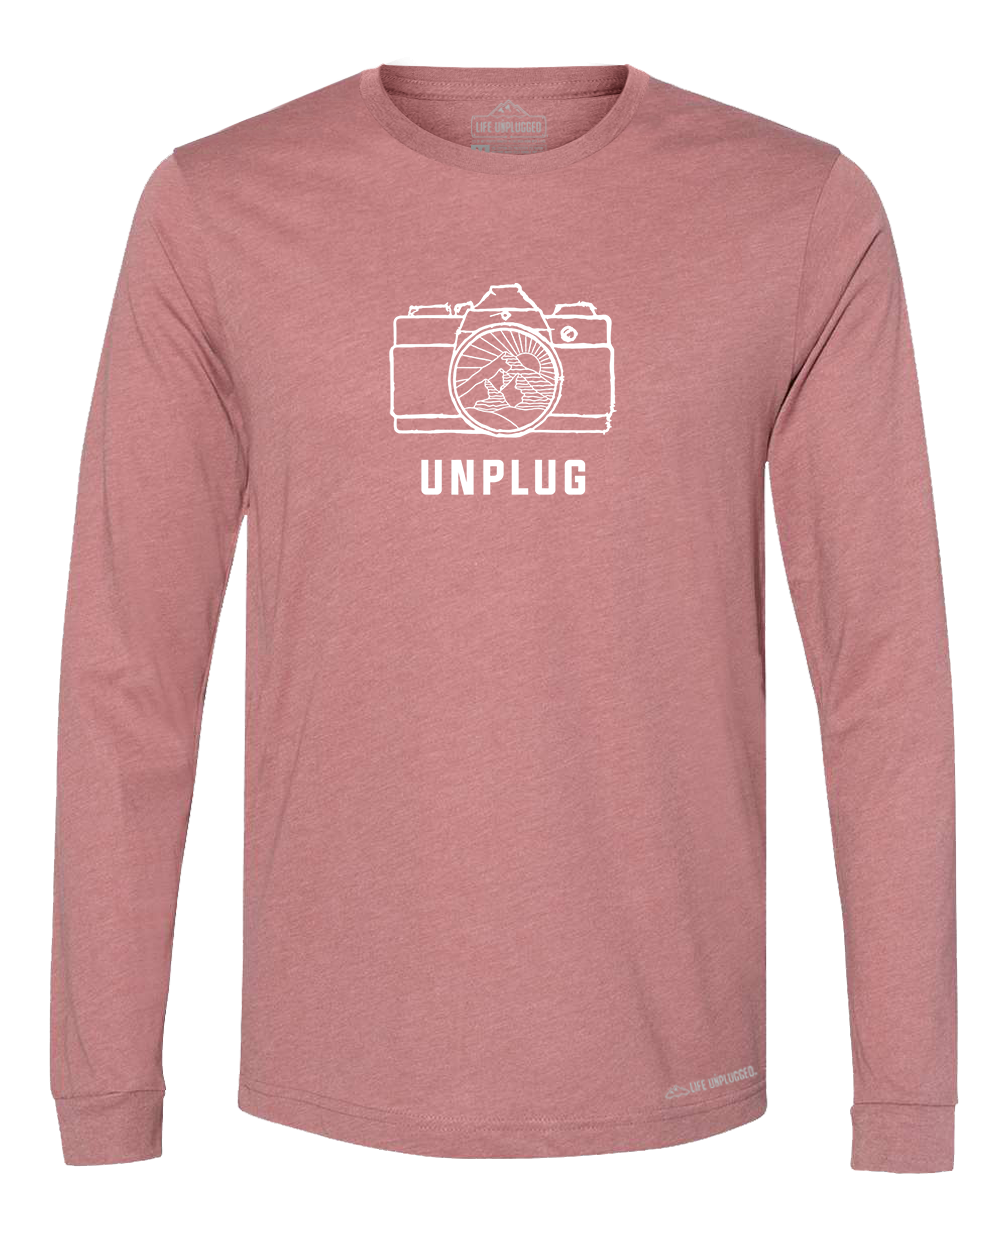 Camera Mountain Lens Premium Polyblend Long Sleeve T-Shirt - Life Unplugged